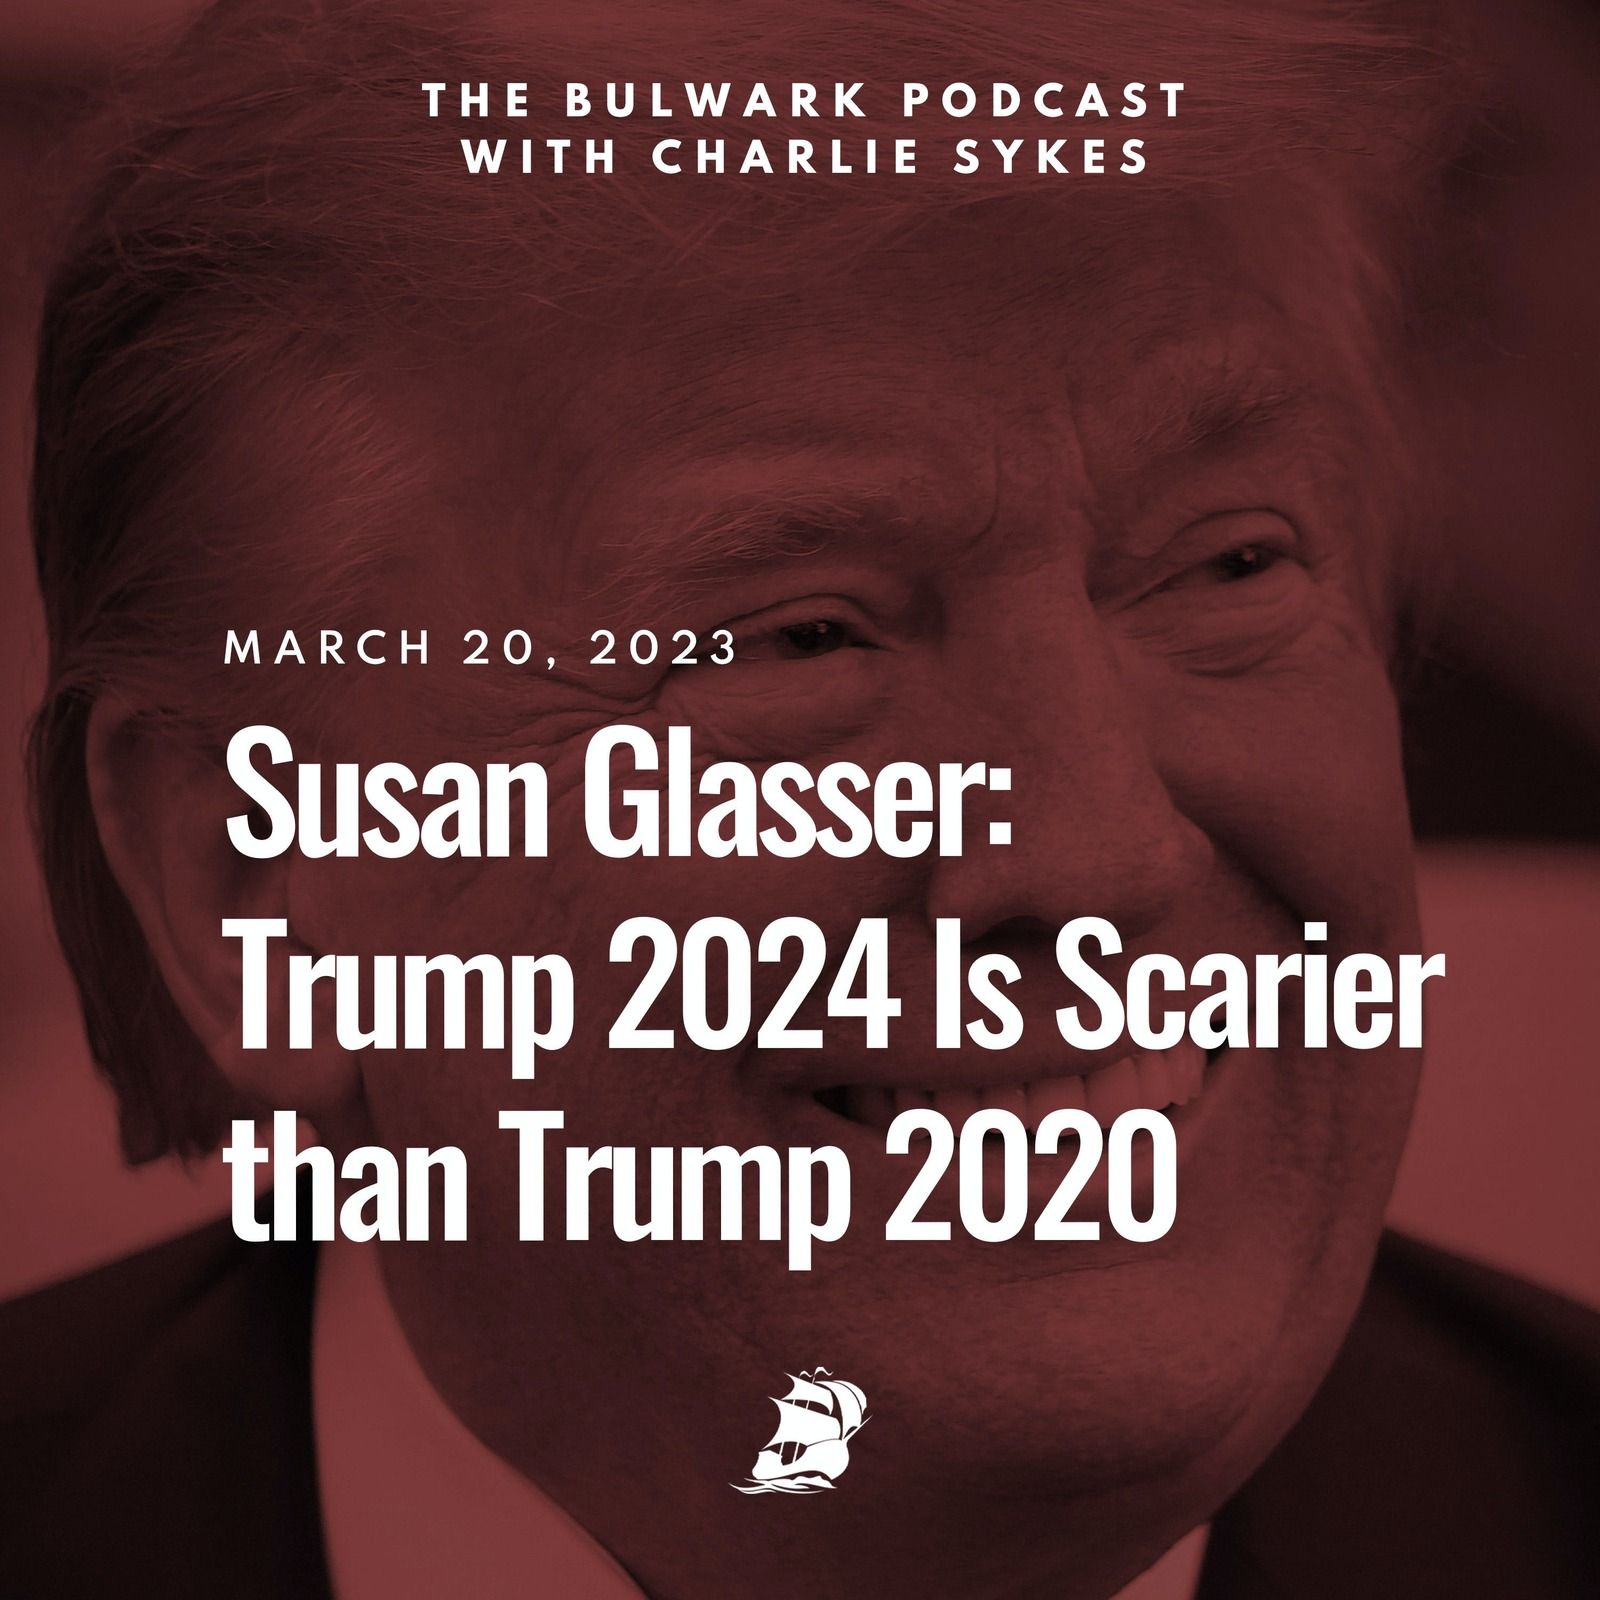 Susan Glasser: Trump 2024 Is Scarier than Trump 2020